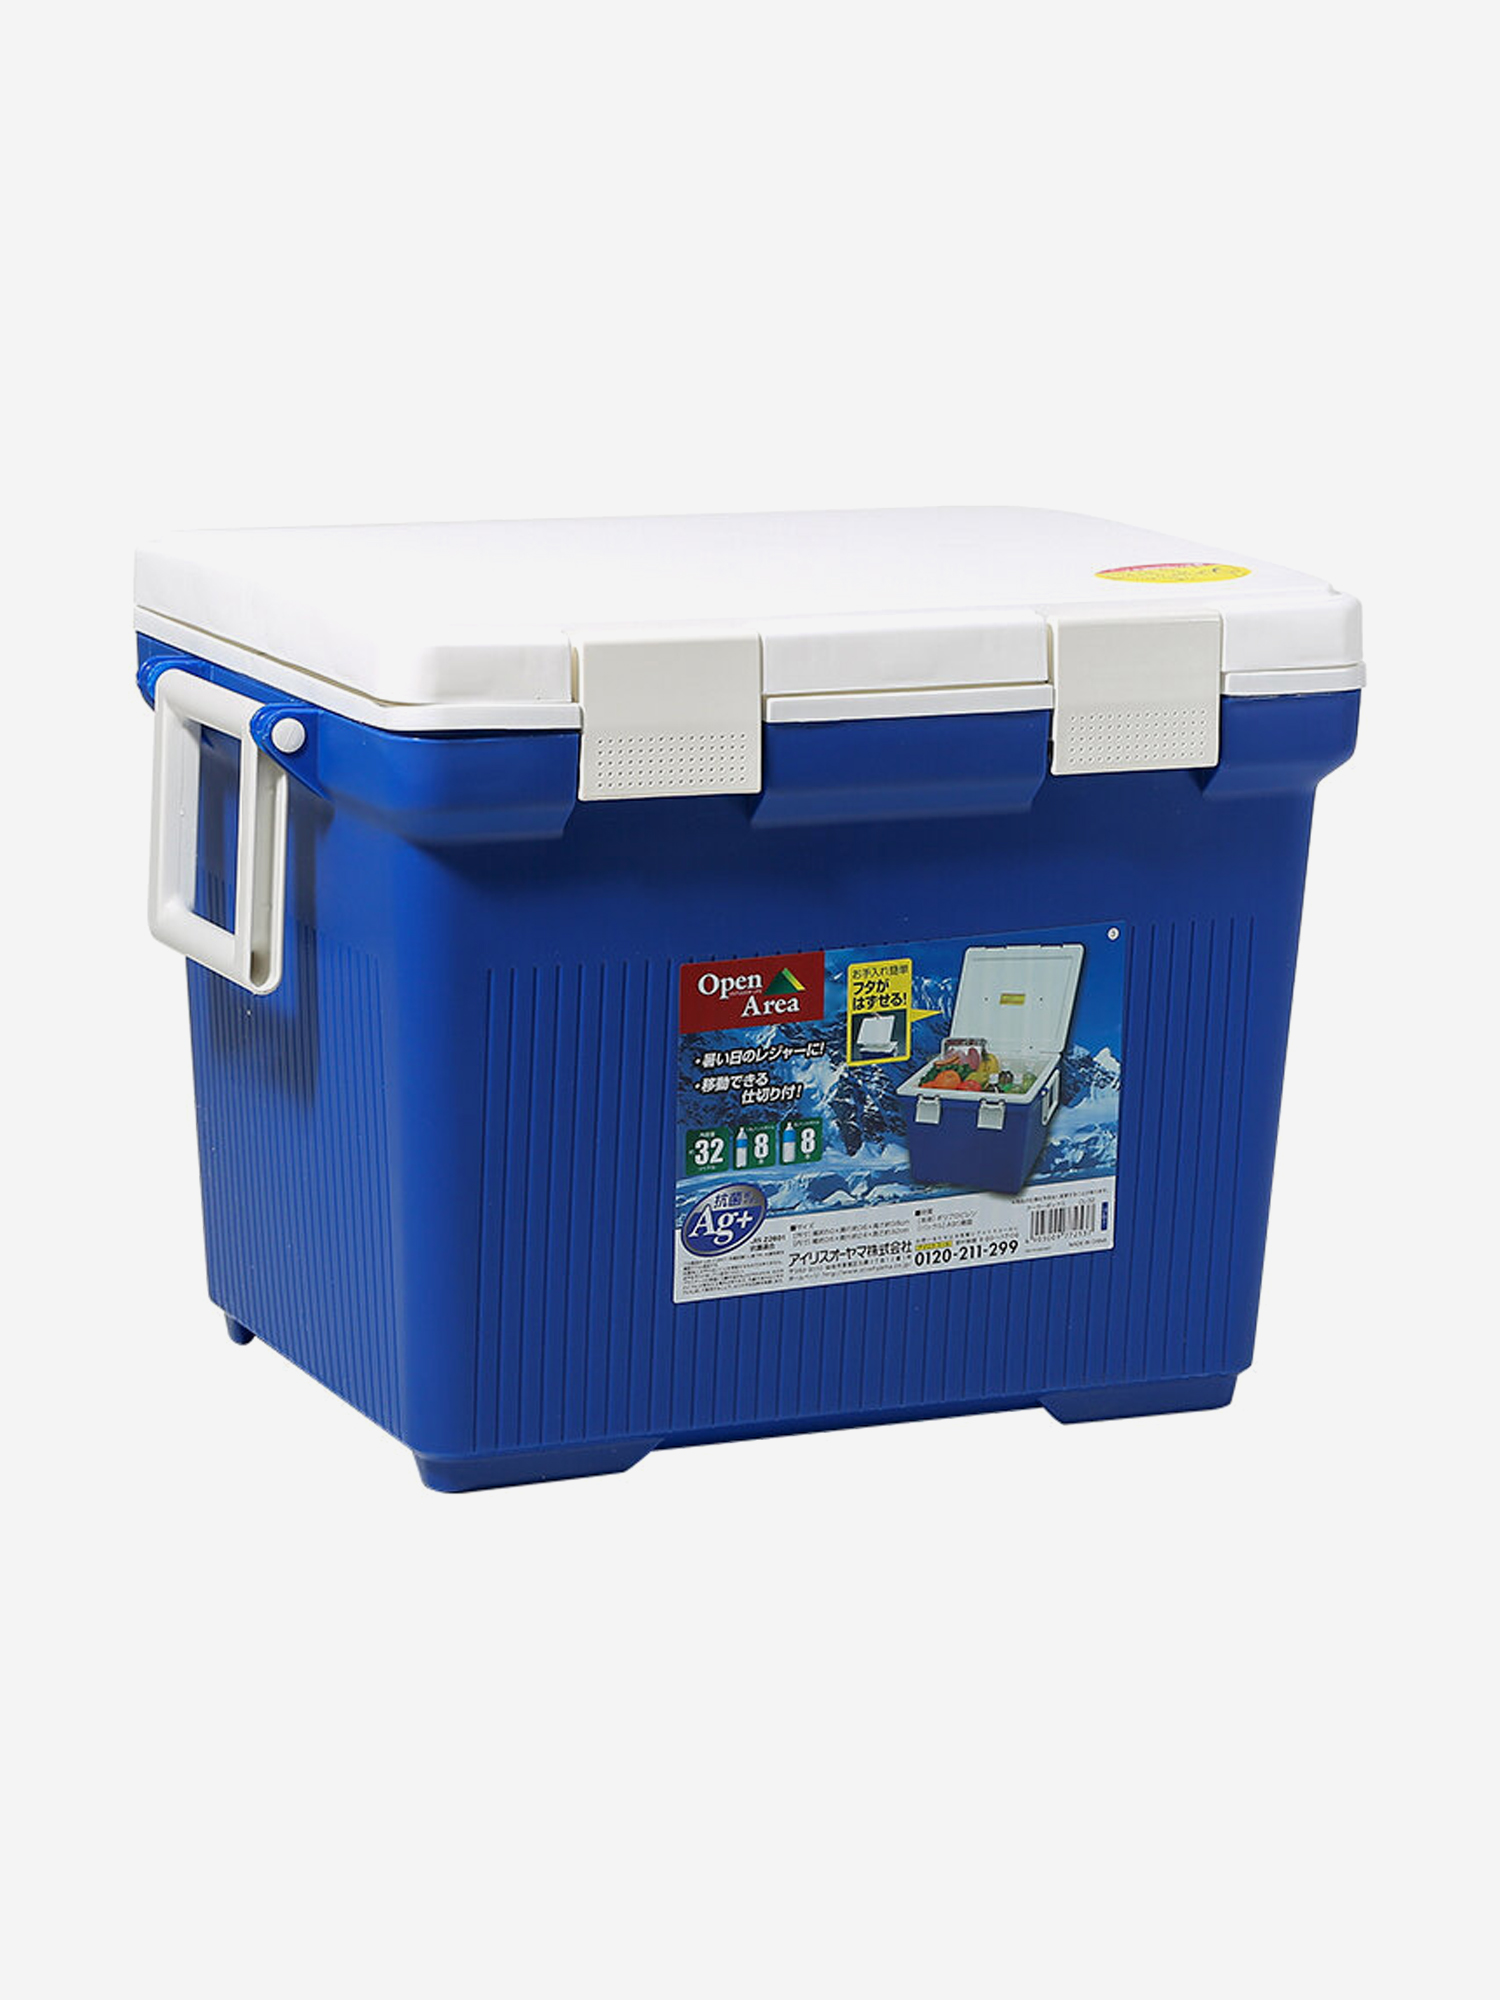 Термобокс IRIS OHYAMA Cooler Box CL-32, 32 литра синий/белый, Синий термобокс iris ohyama hugel vacuum cooler box tc 40 белый 40 литров белый